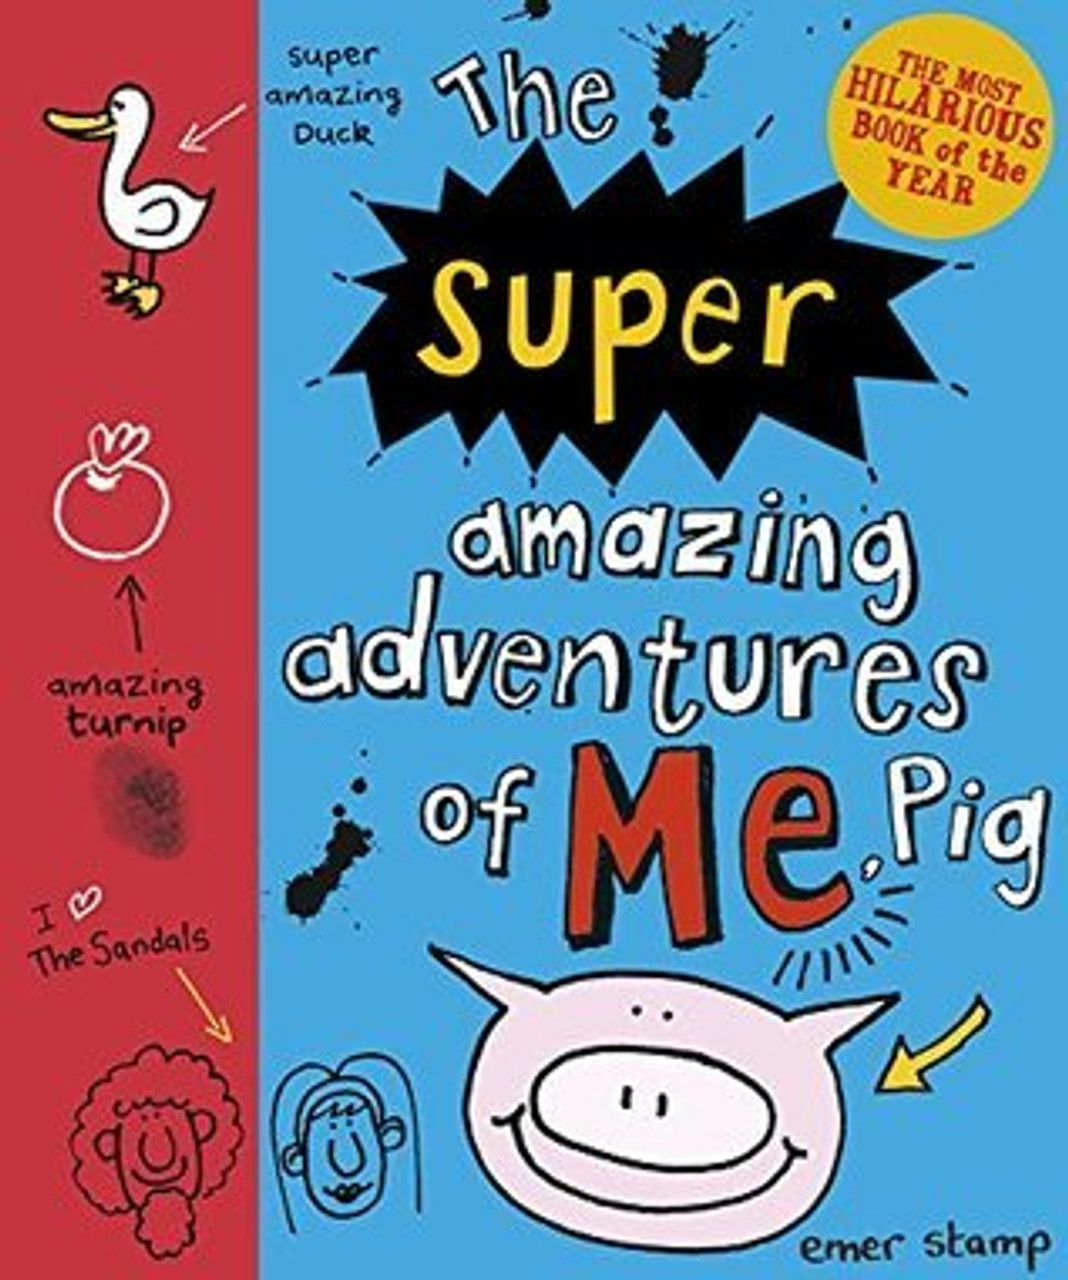 Emer Stamp / The Super Amazing Adventures of Me, Pig (Hardback)